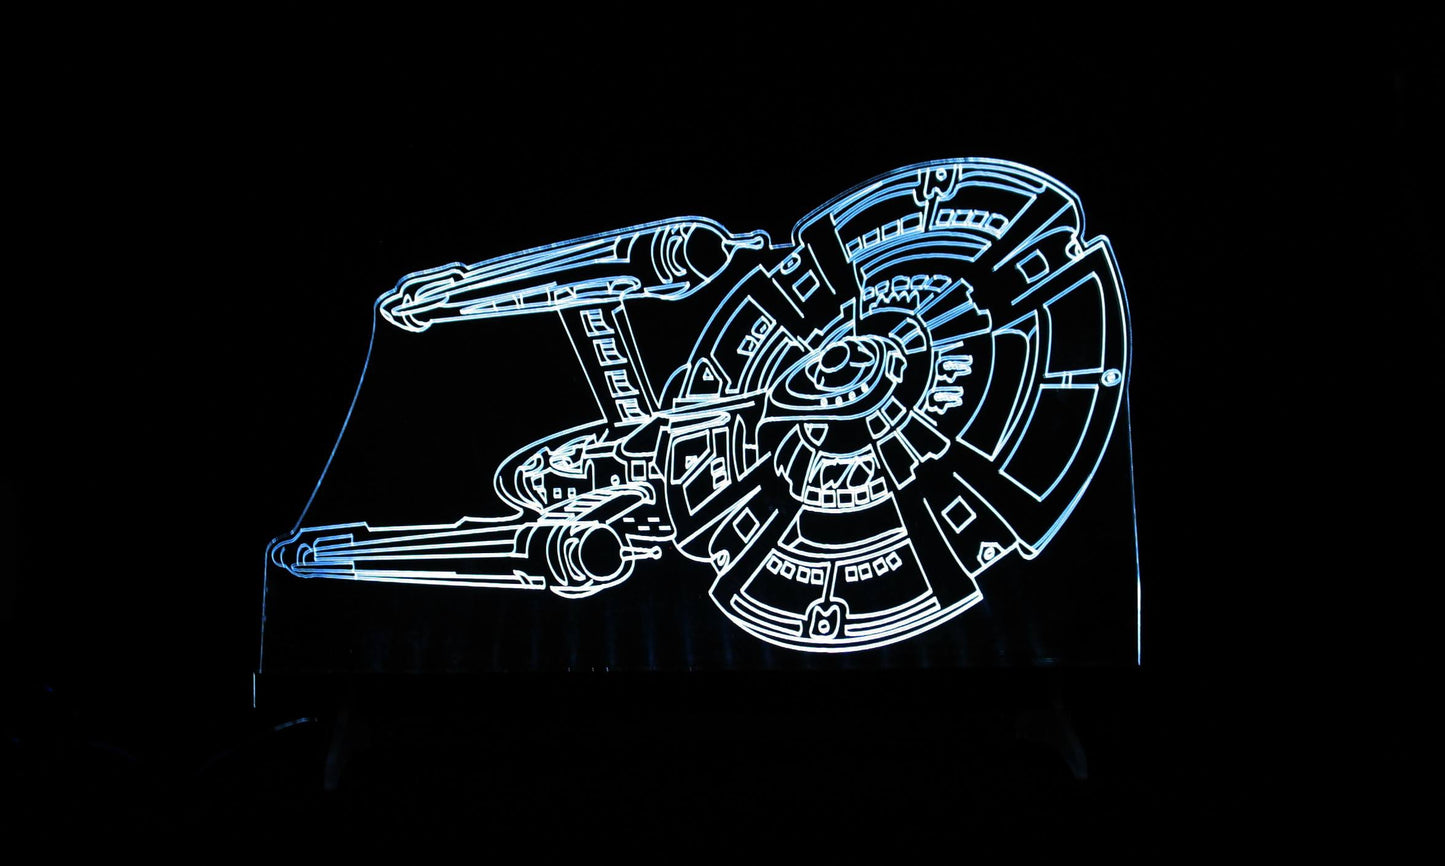 Starship Enterprise Large Rectangle 3-D Optical Illusion LED